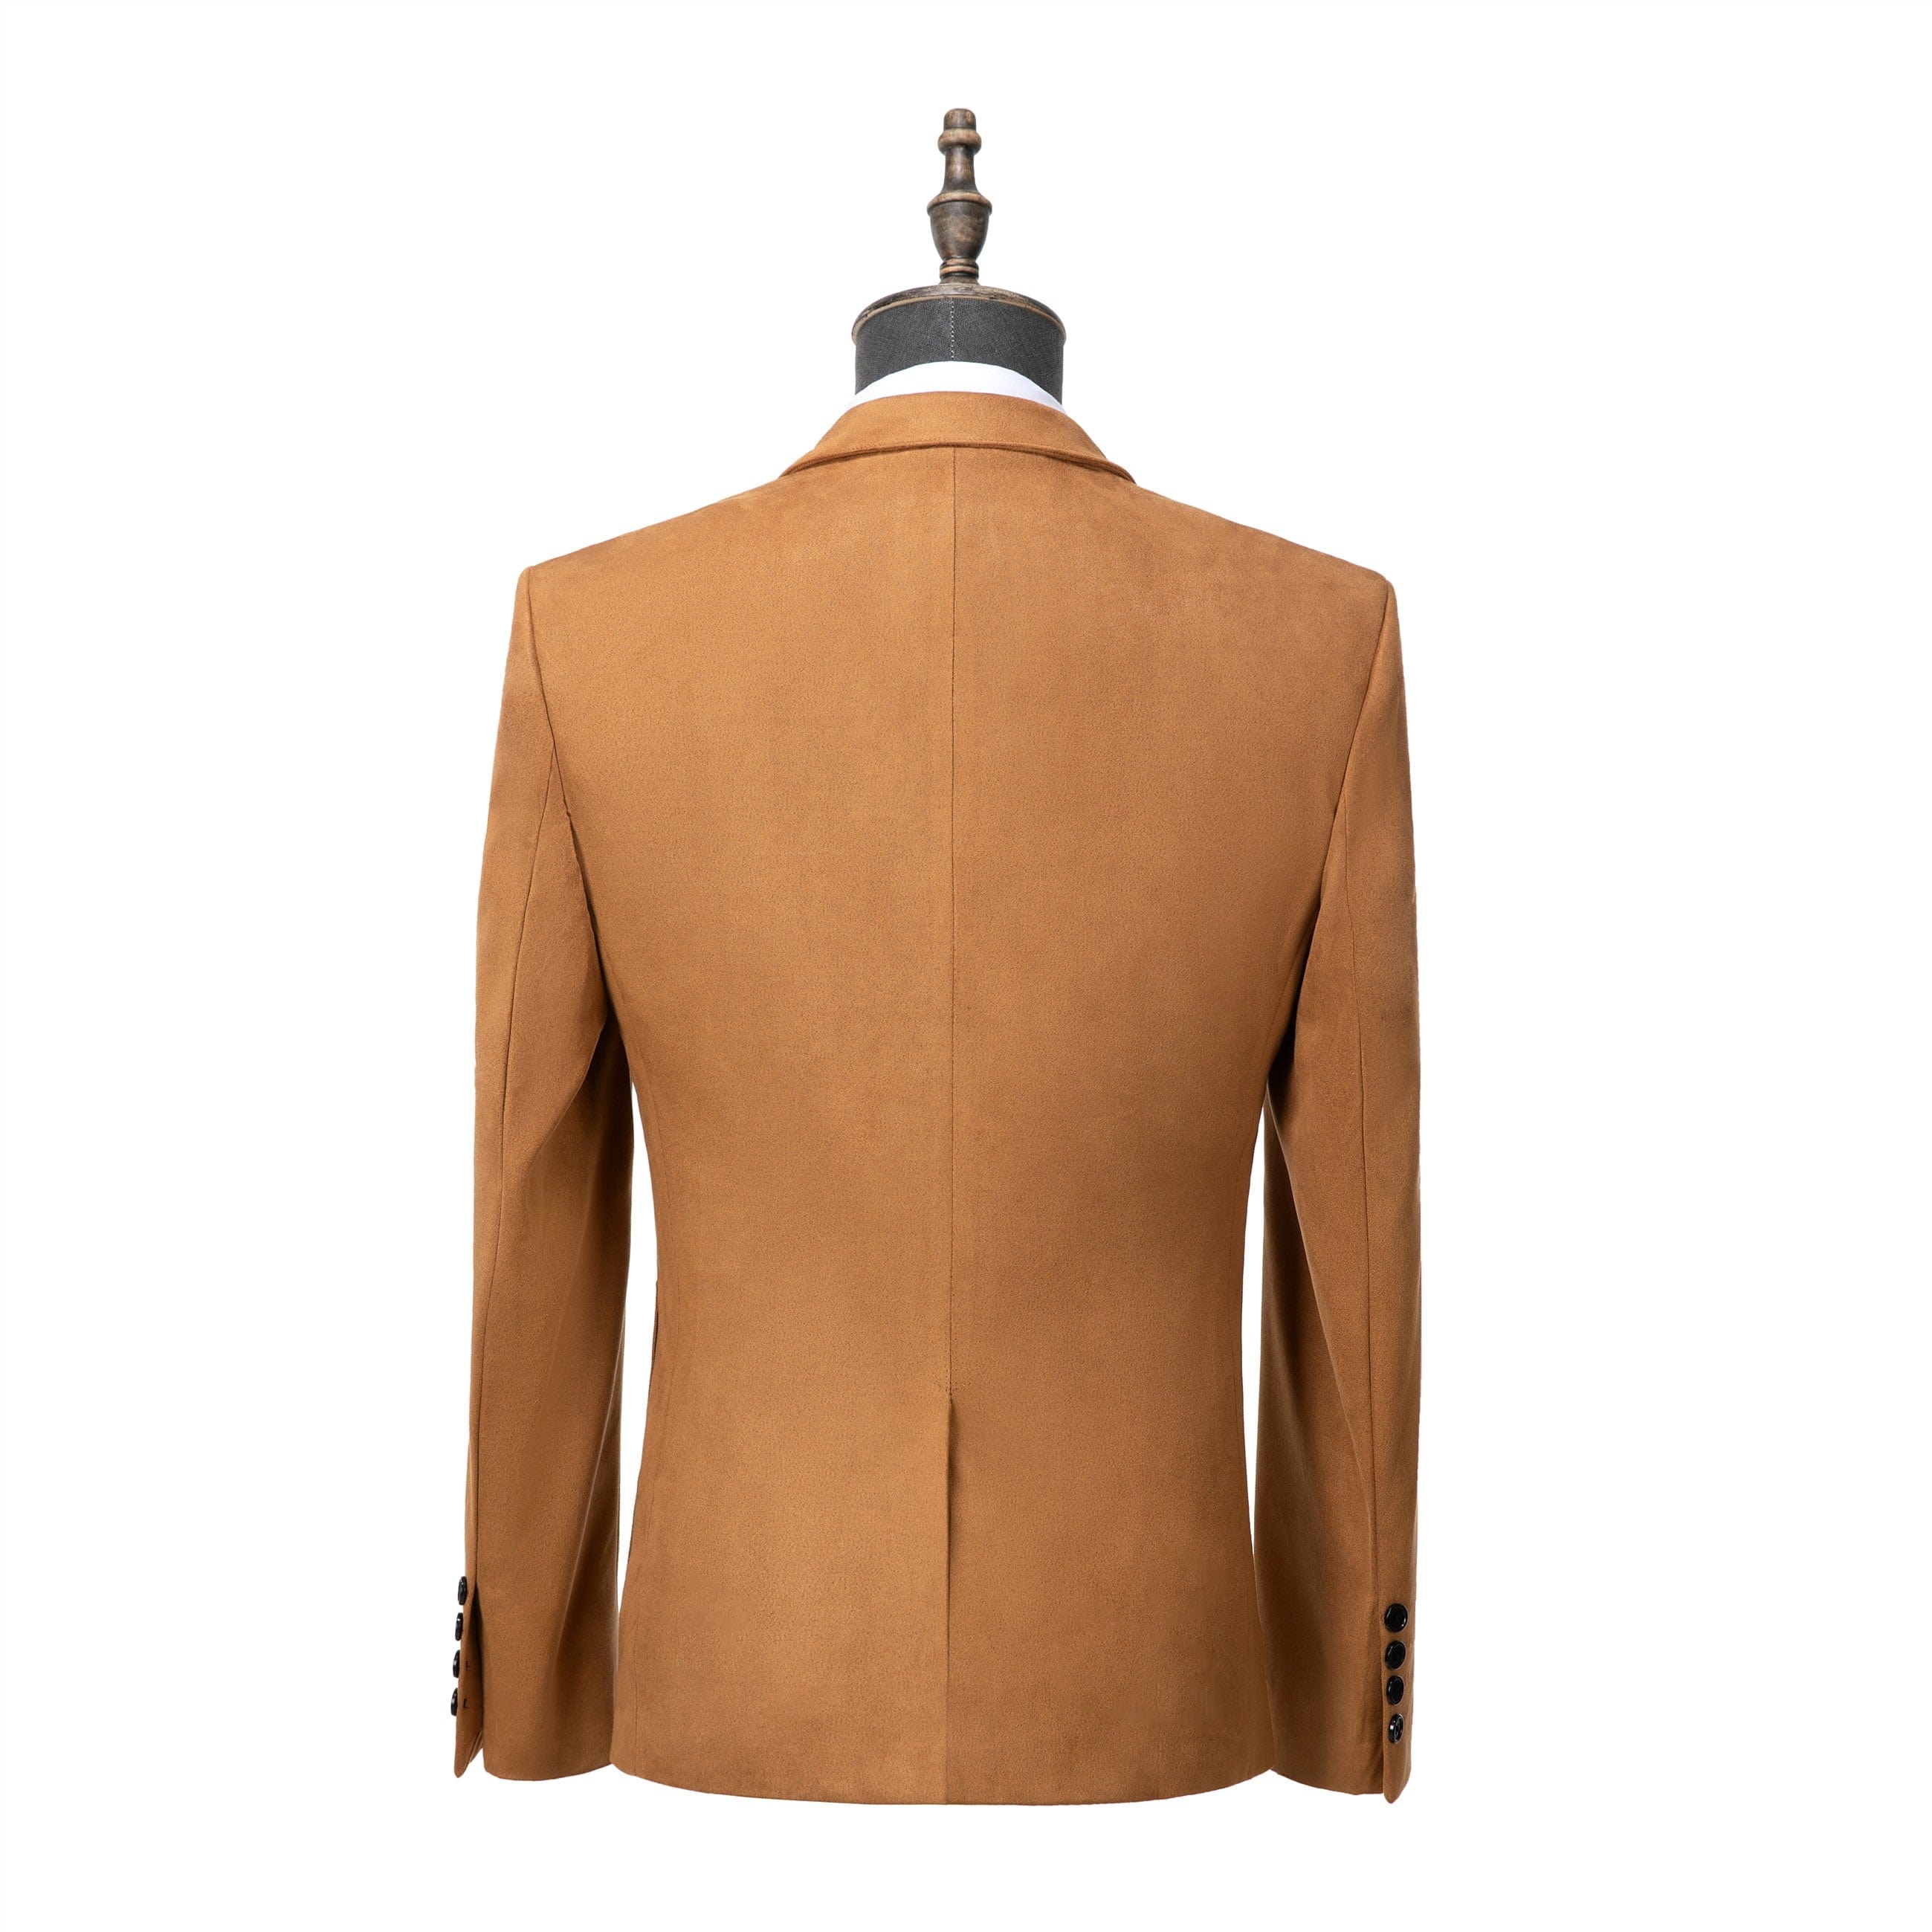 ceehuteey Suede Men's Fashion Notch Lapel Blazer Denim Jacket